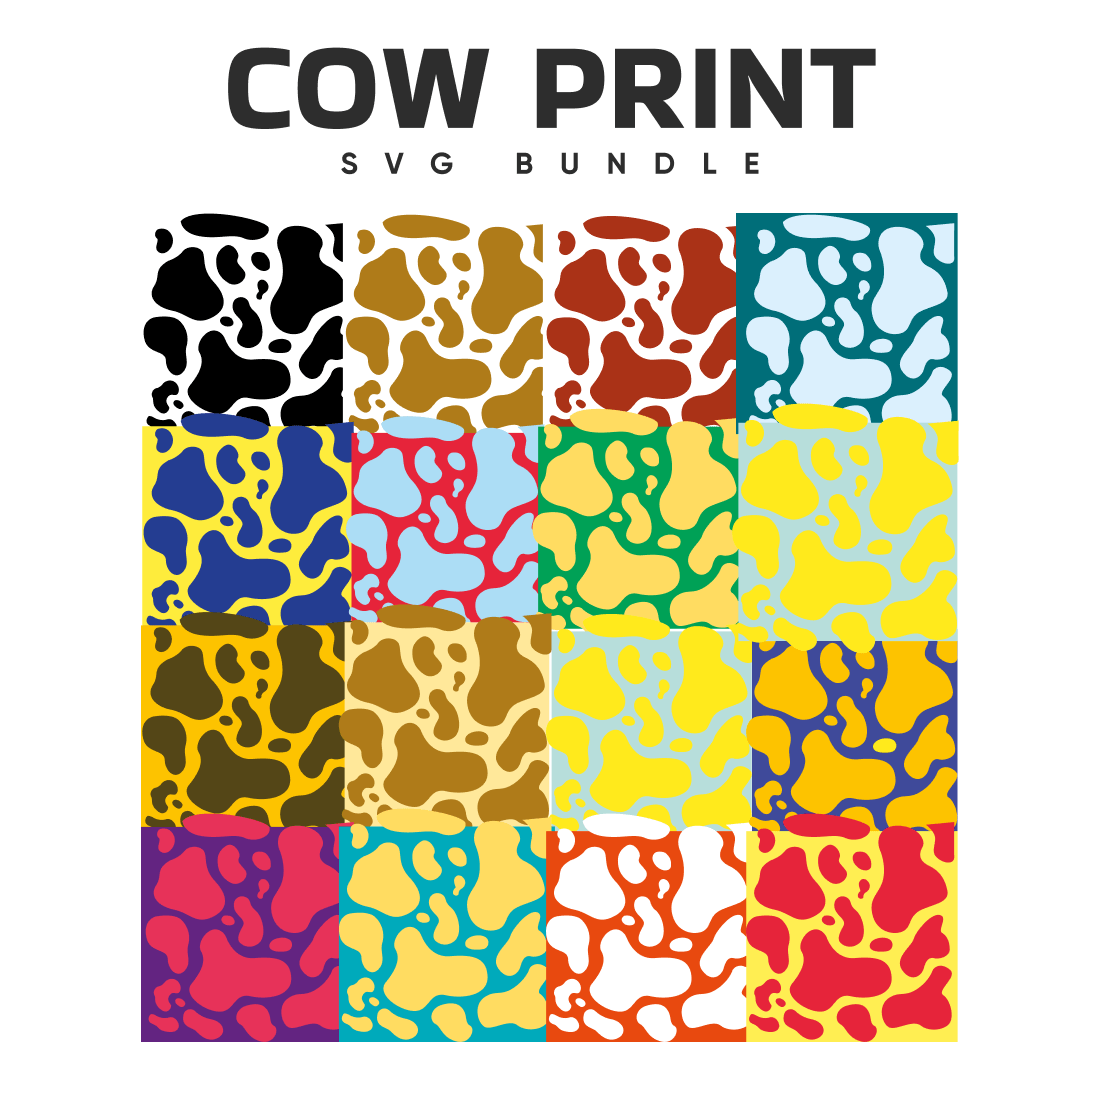 Cow Print SVG Free.